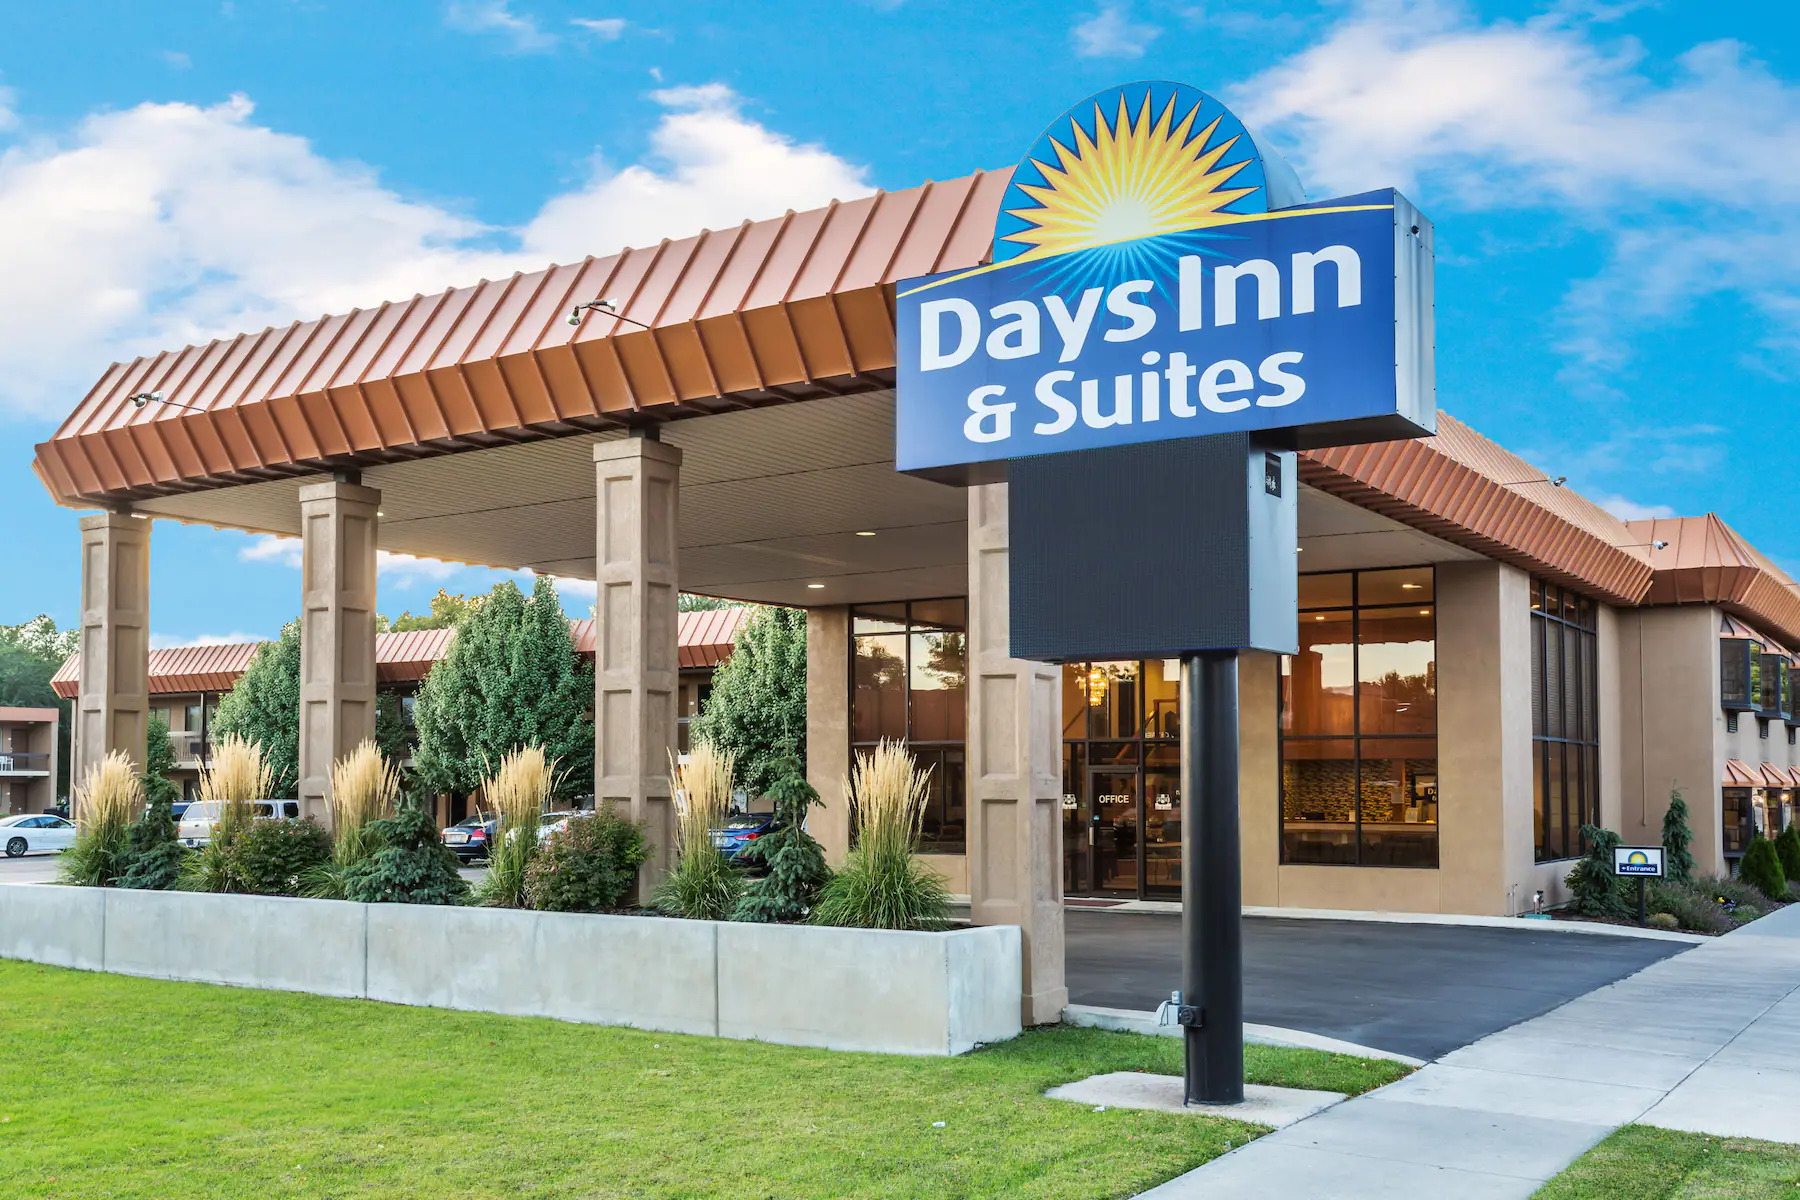 Photo of Days inn & Suites by Wyndham Logan, Logan, UT